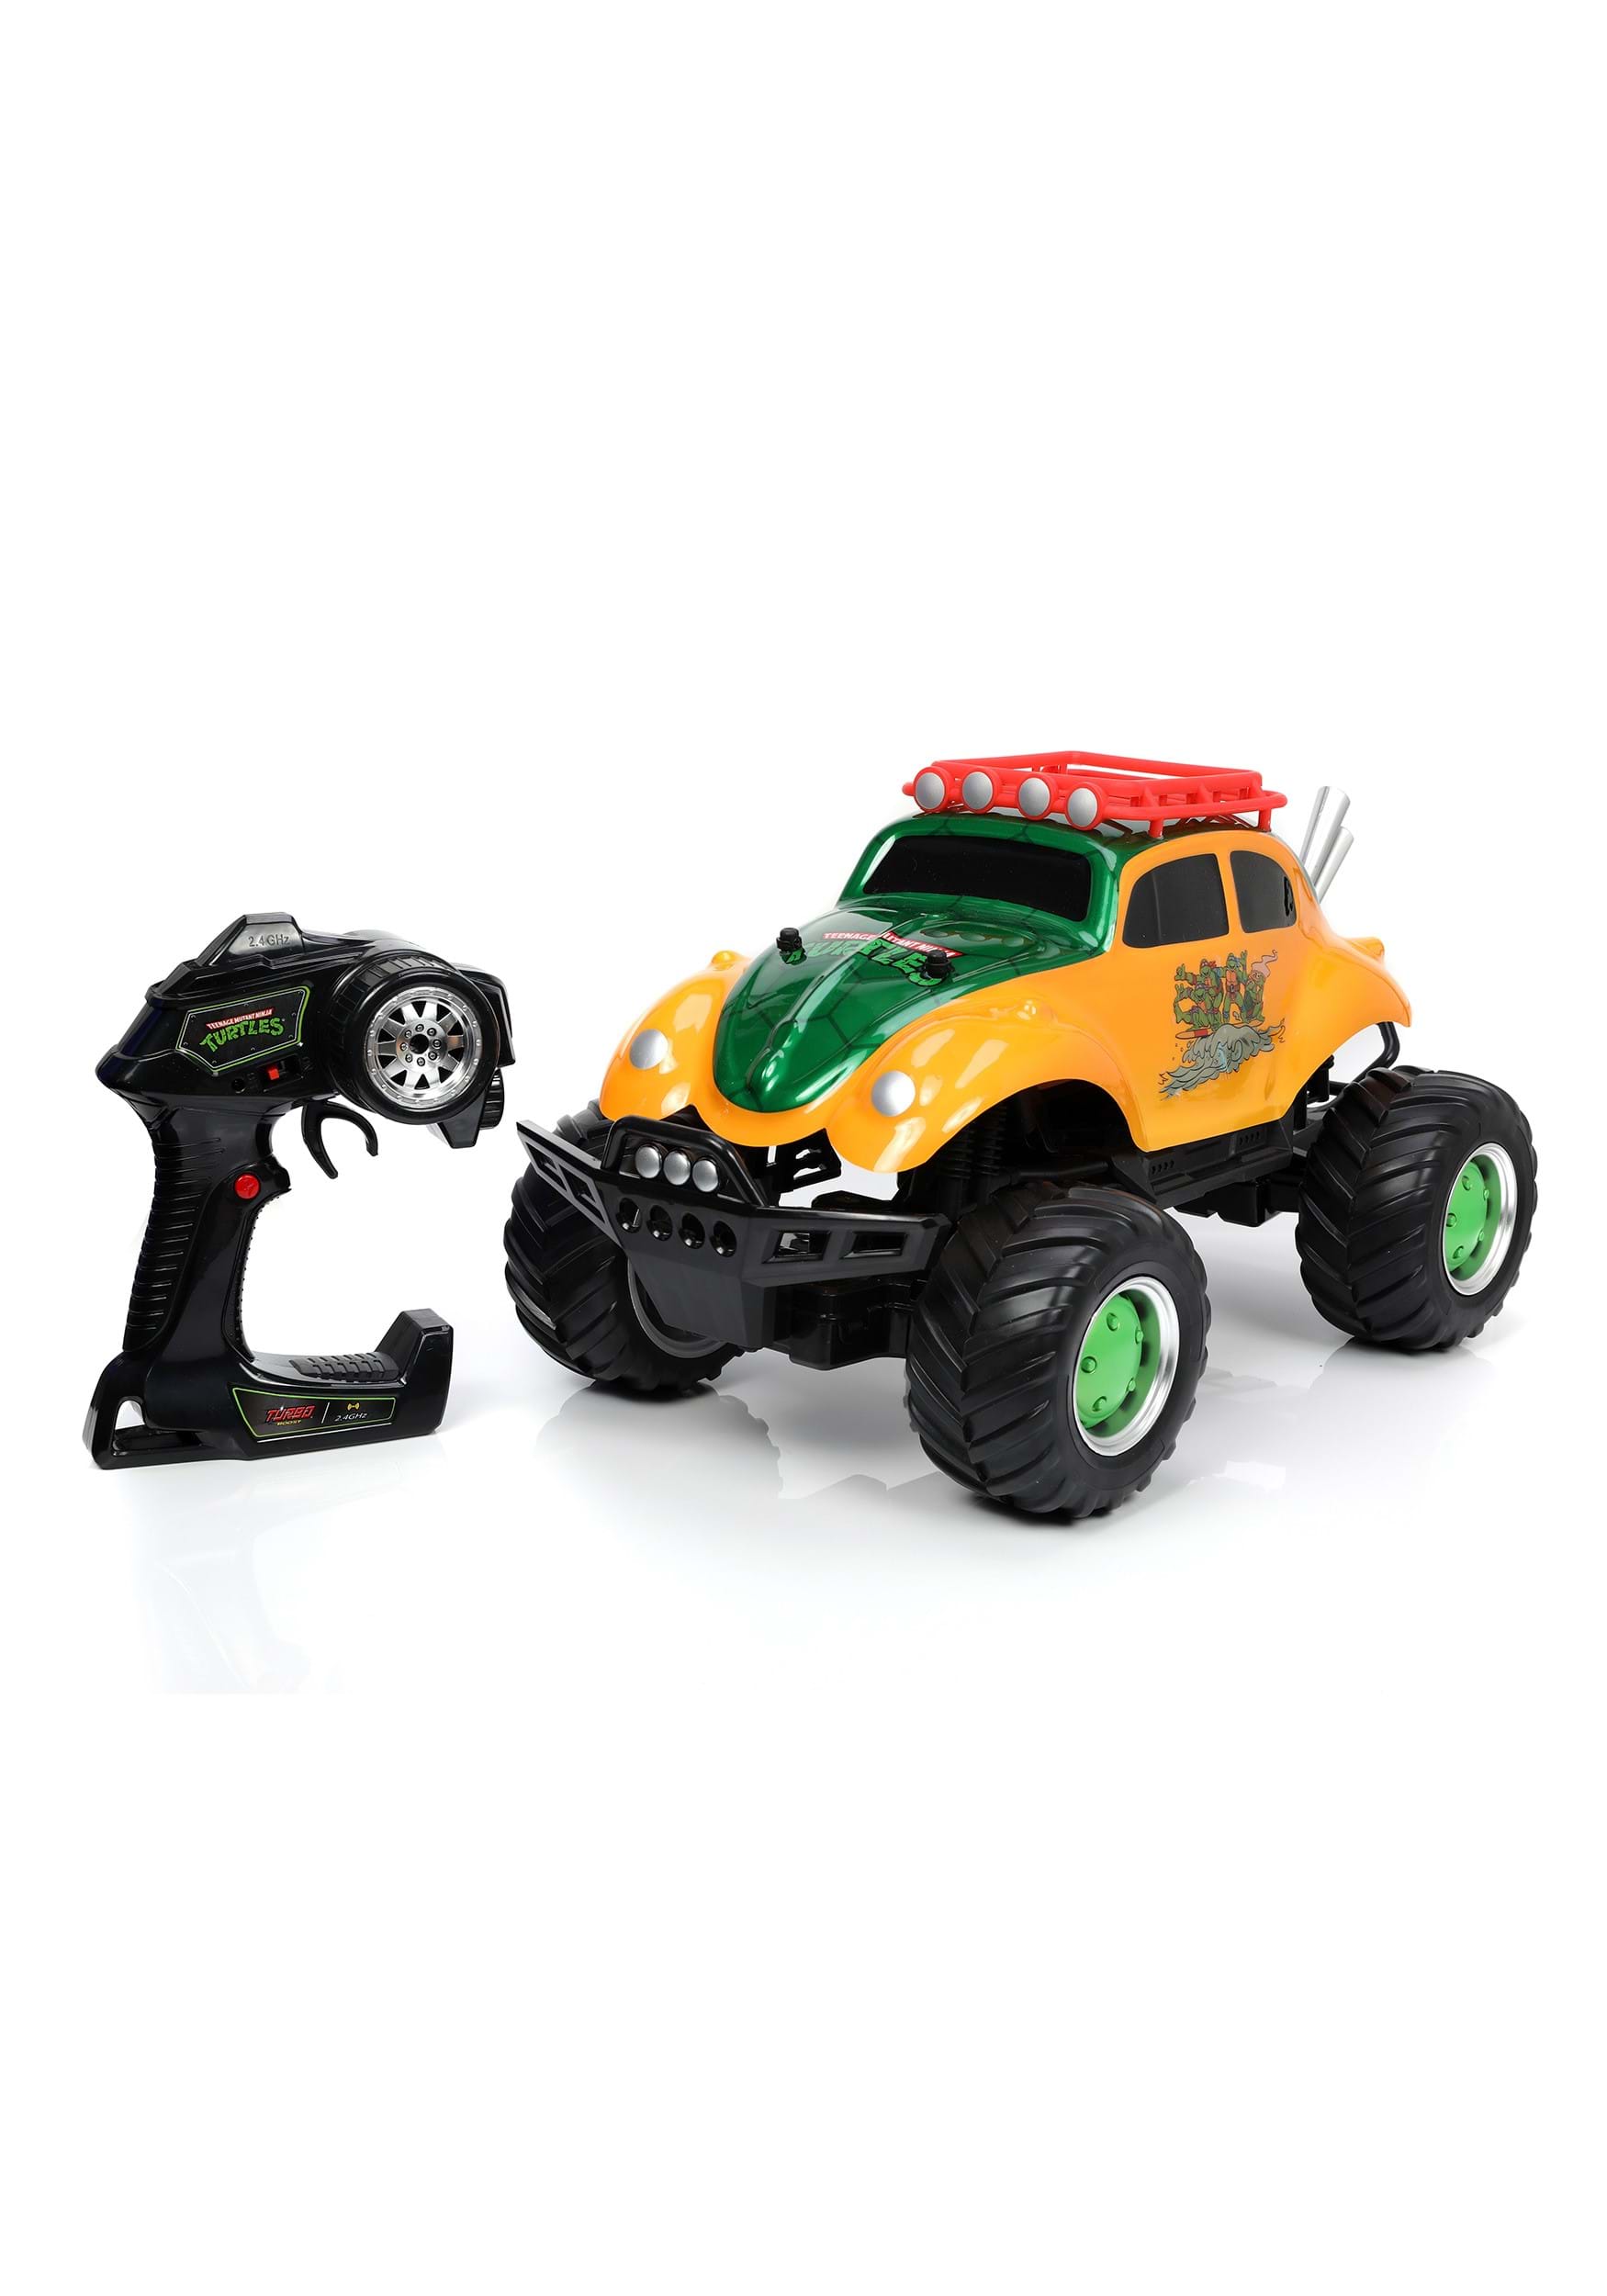 Teenage Mutant Ninja Turtles 1:12 Volkswagen Baja Beetle RC Vehicle